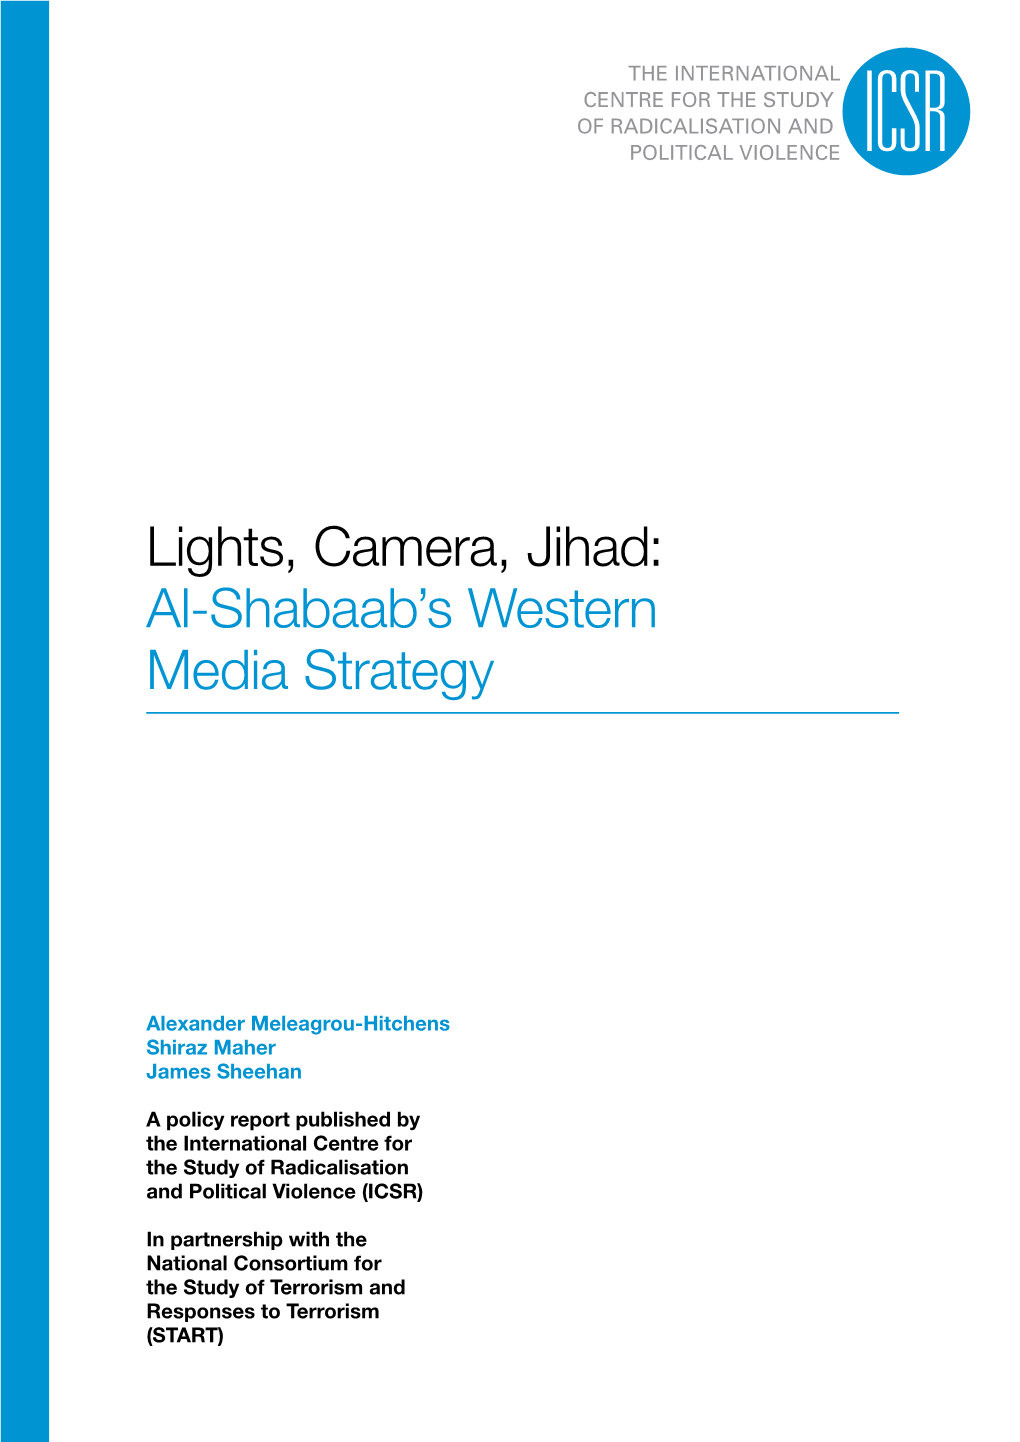 Lights, Camera, Jihad: Al-Shabaab's Western Media Strategy